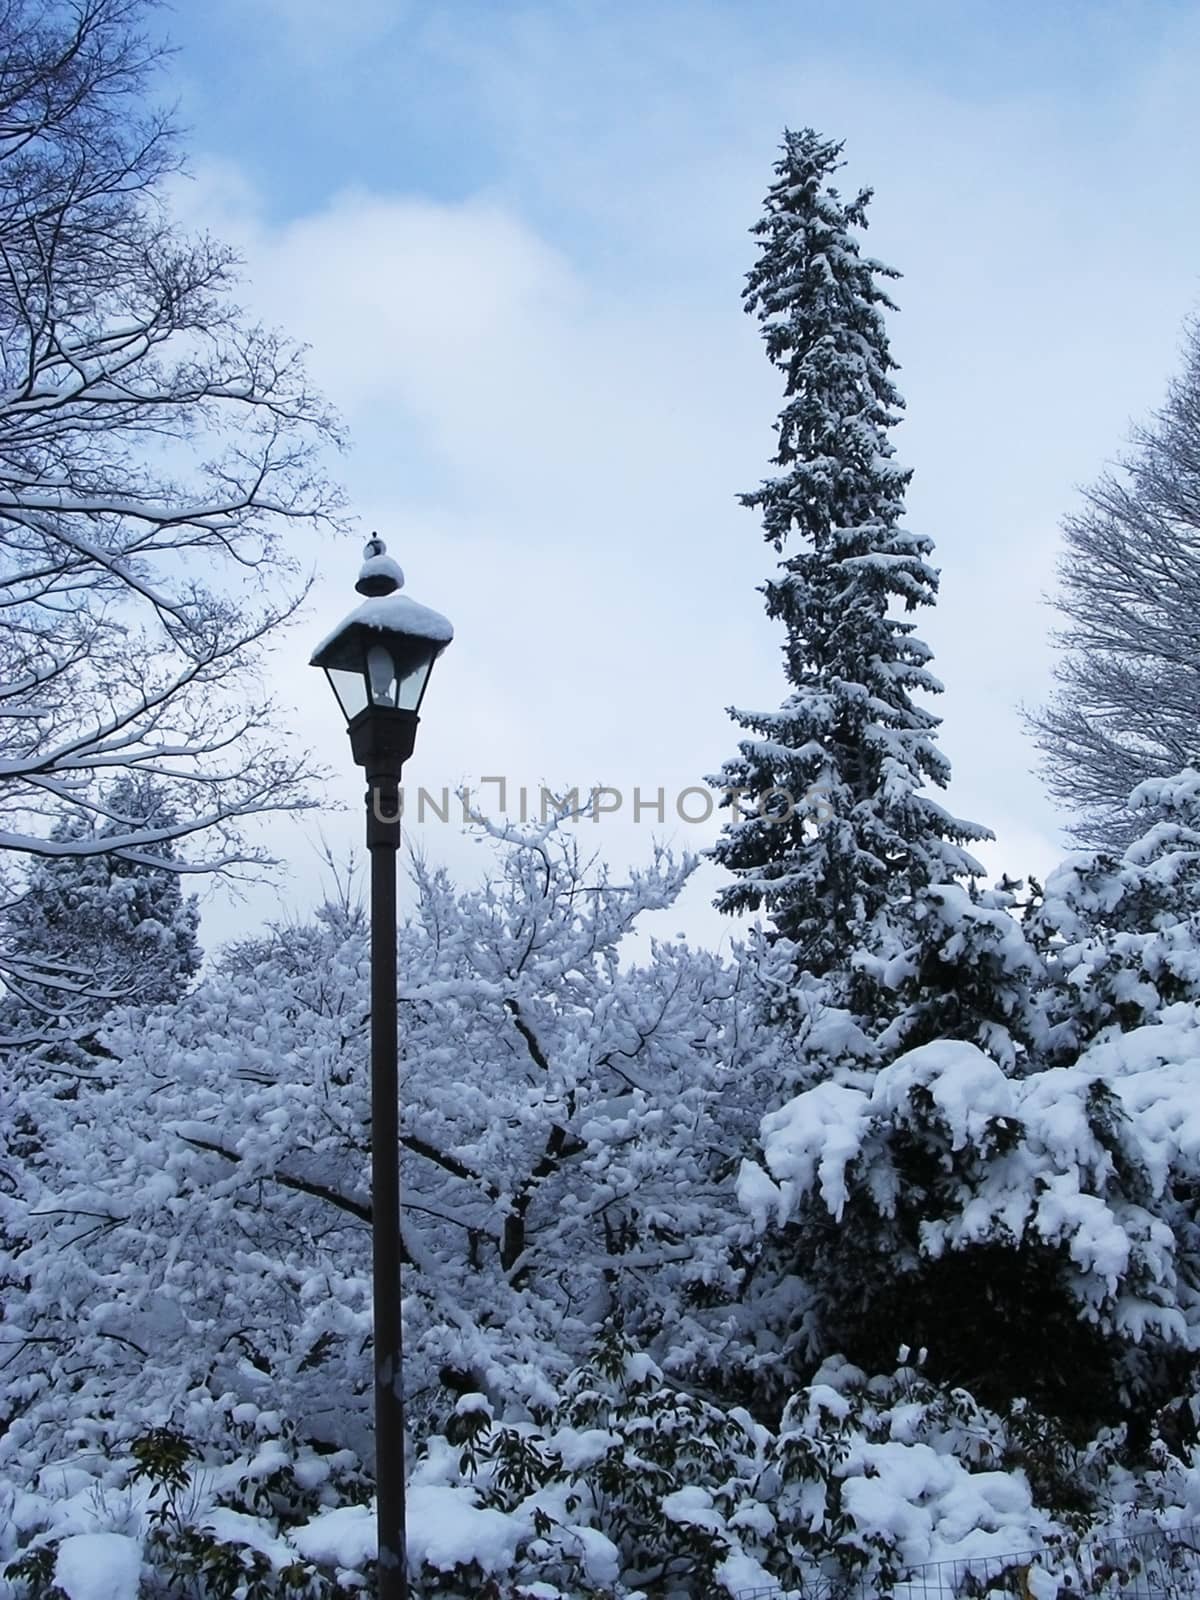 Light pole. Winter trees in snow.